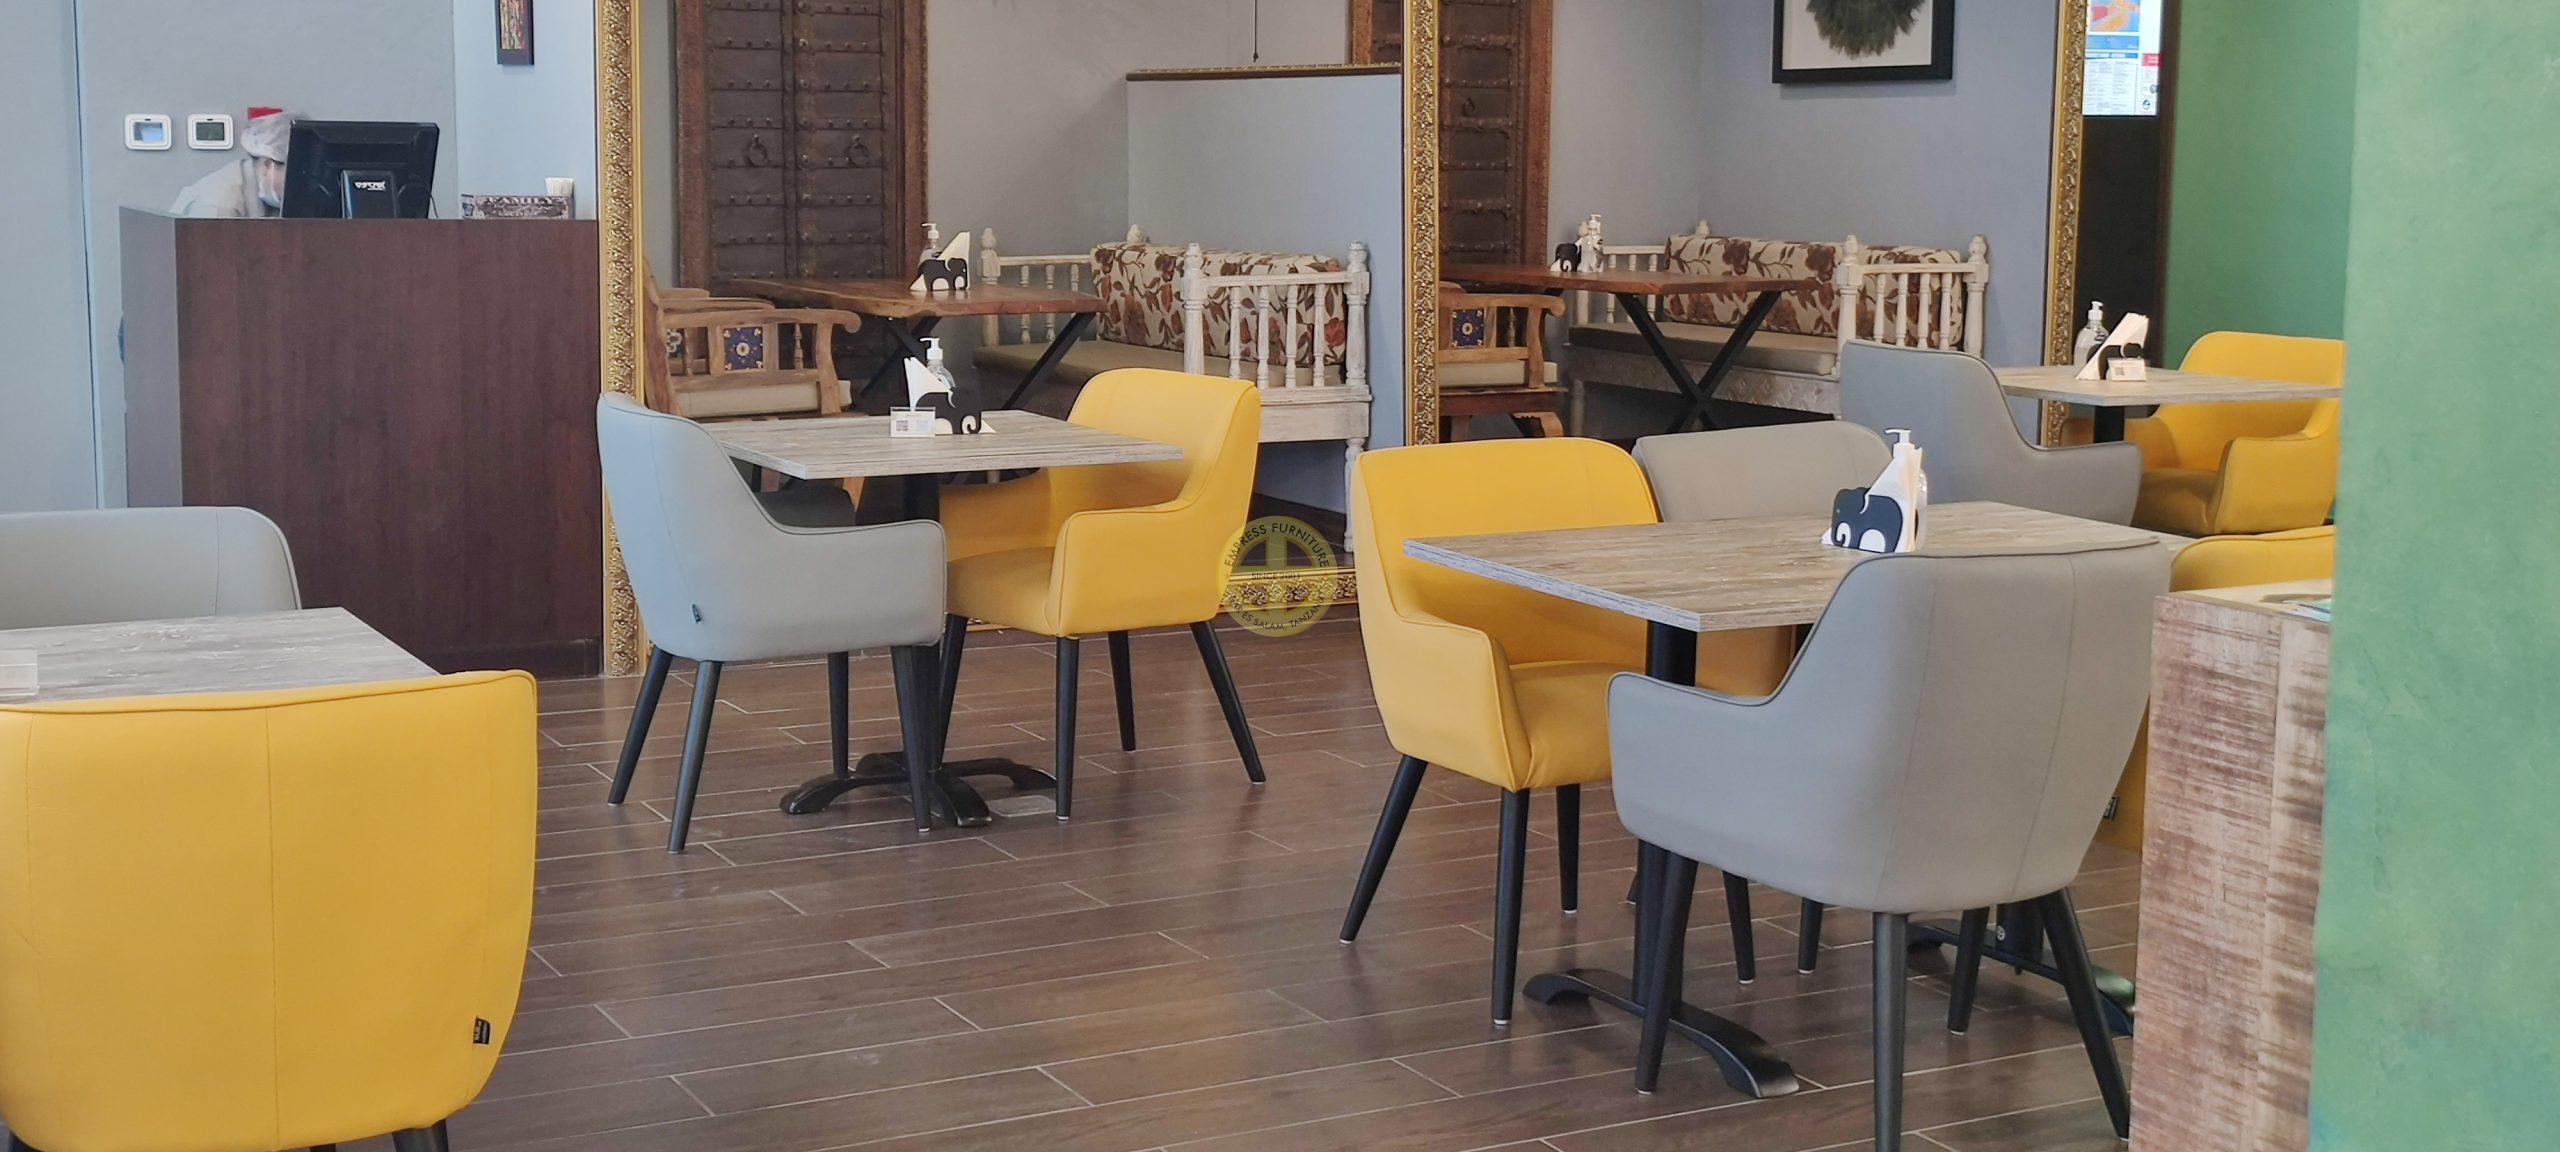 Cafe Furniture UAE